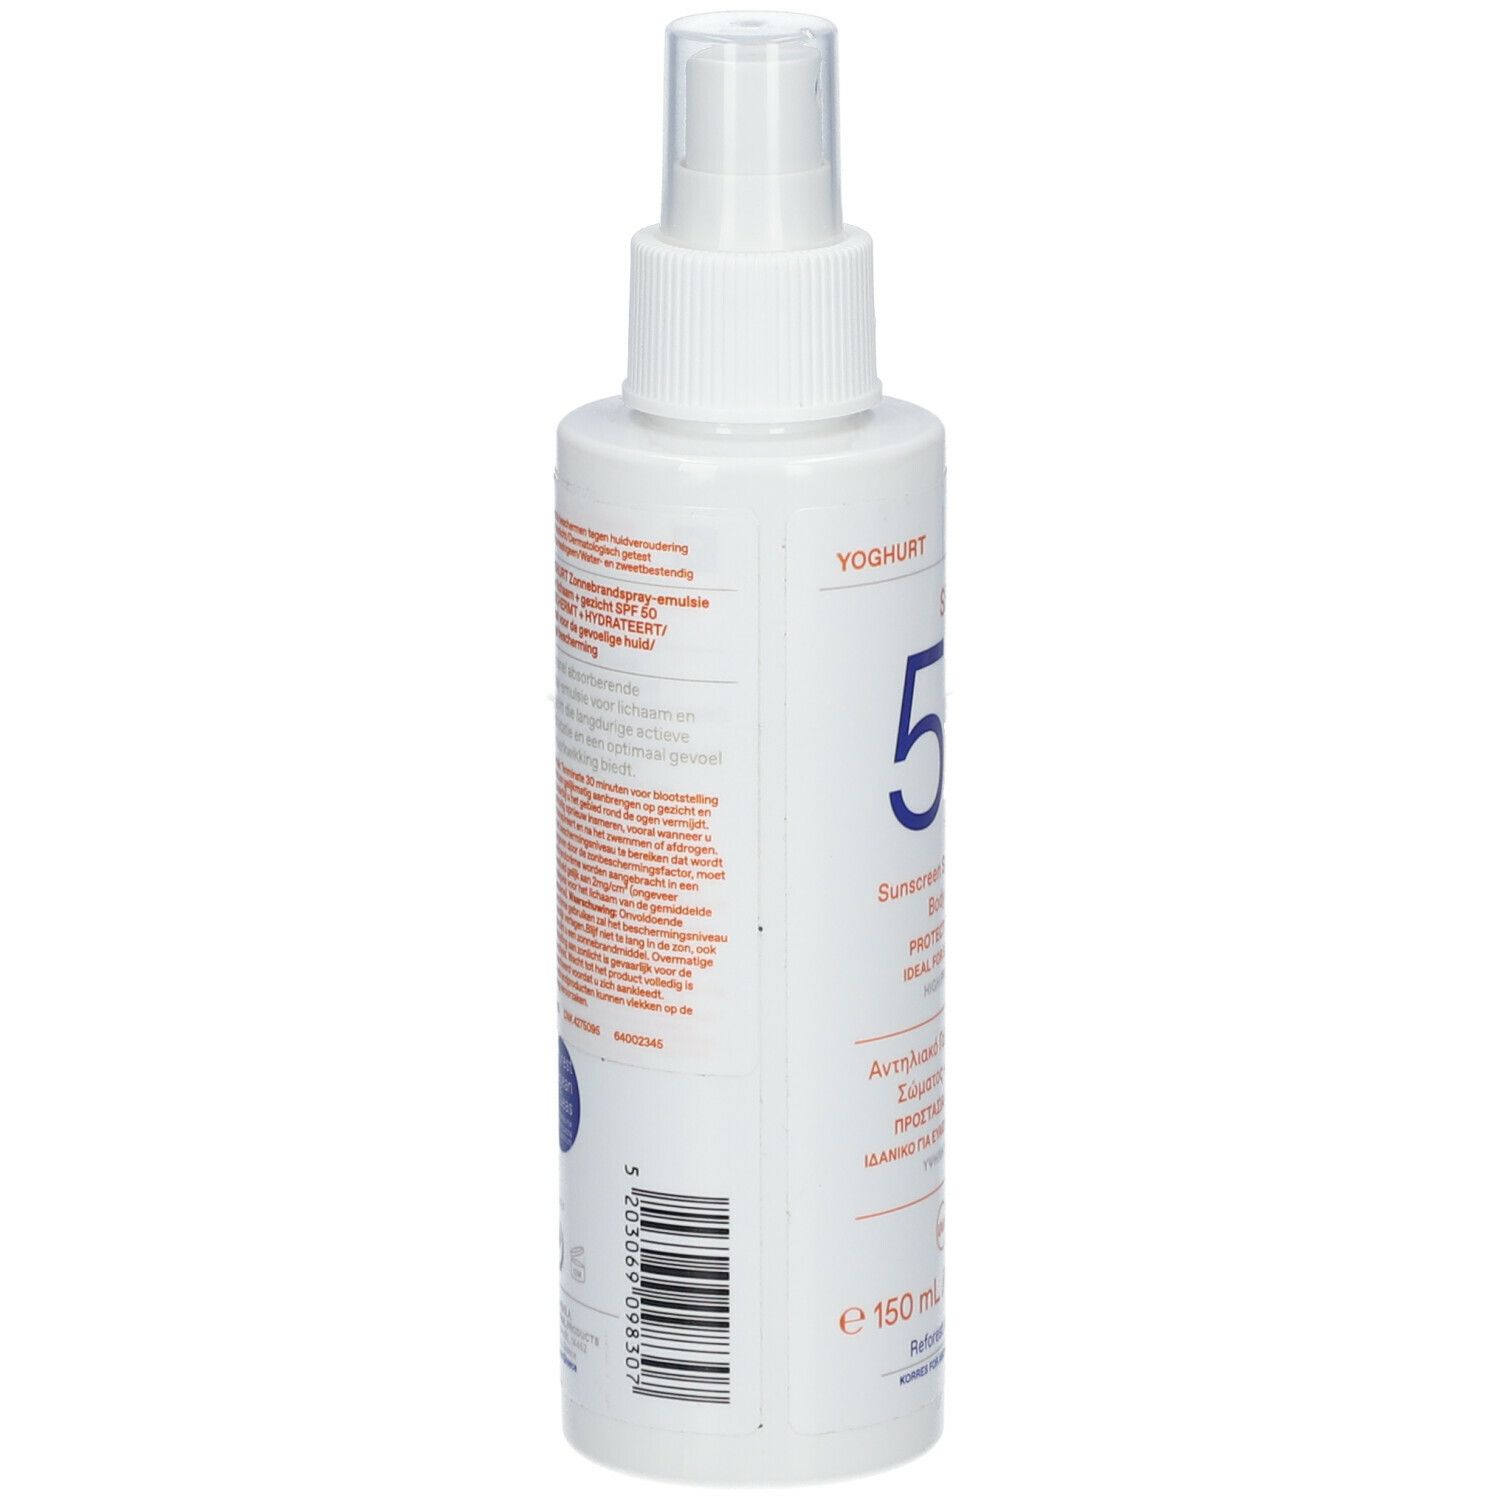 Korres Yoghurt Sunscreen Spray Emulsion Face & Body SPF50